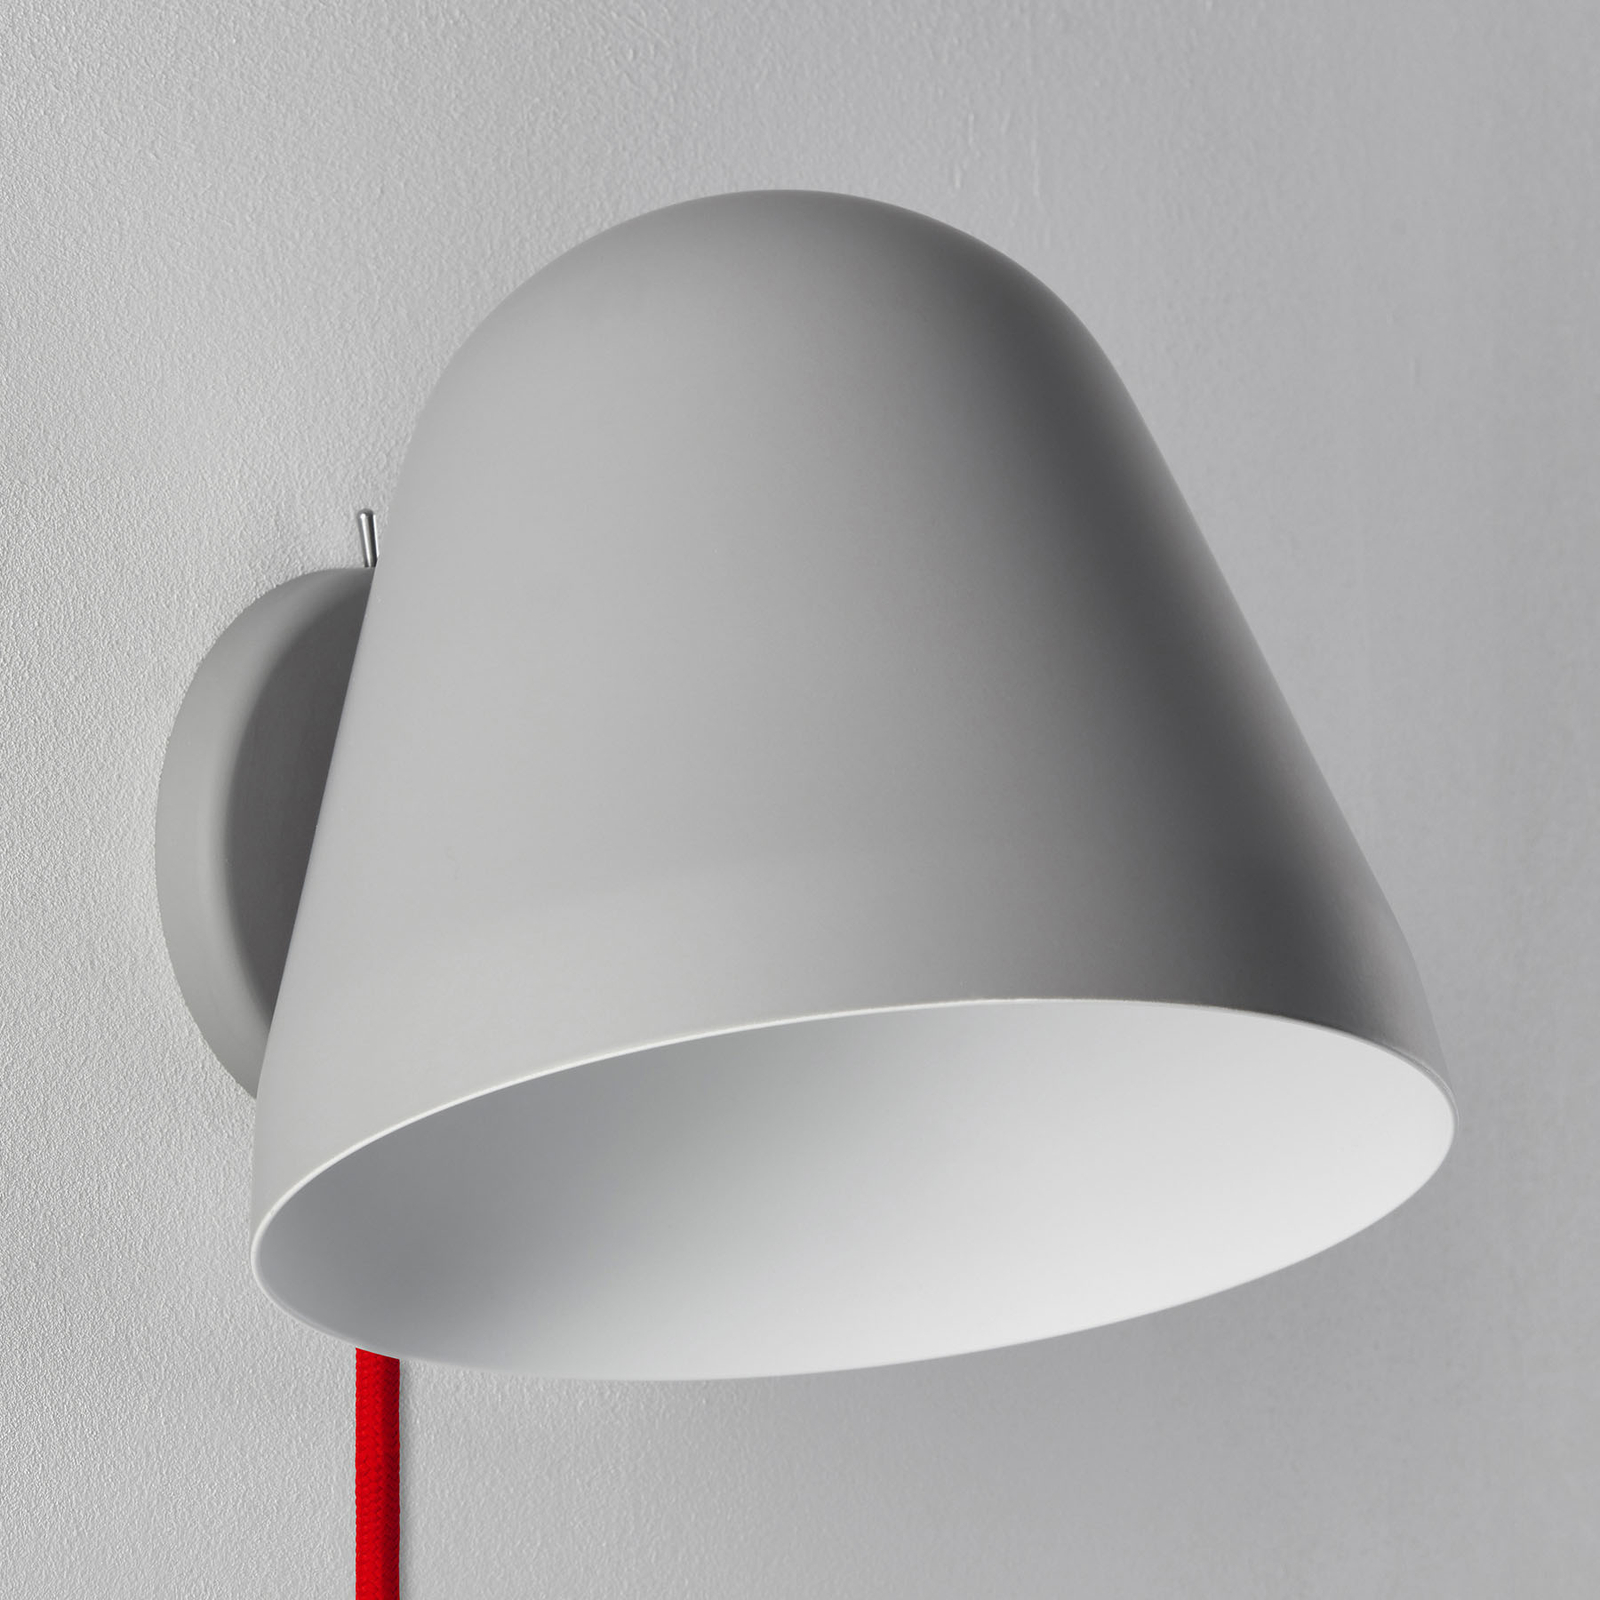 Nyta Tilt Wall Short wall lamp, red cable, grey